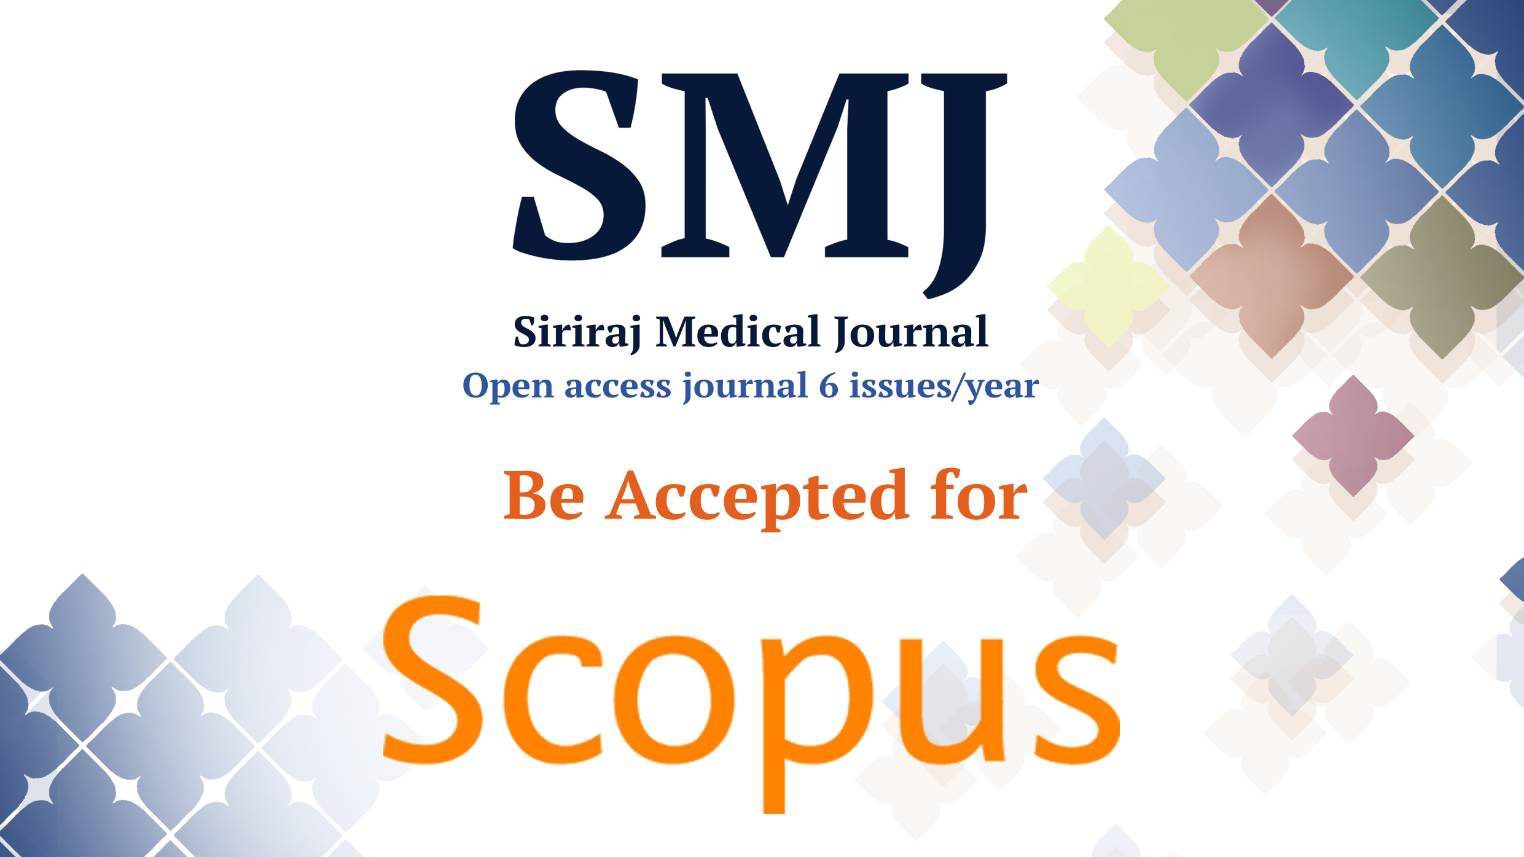 Top 10 Cited Manuscripts from Siriraj Medical Journal in Scopus Database